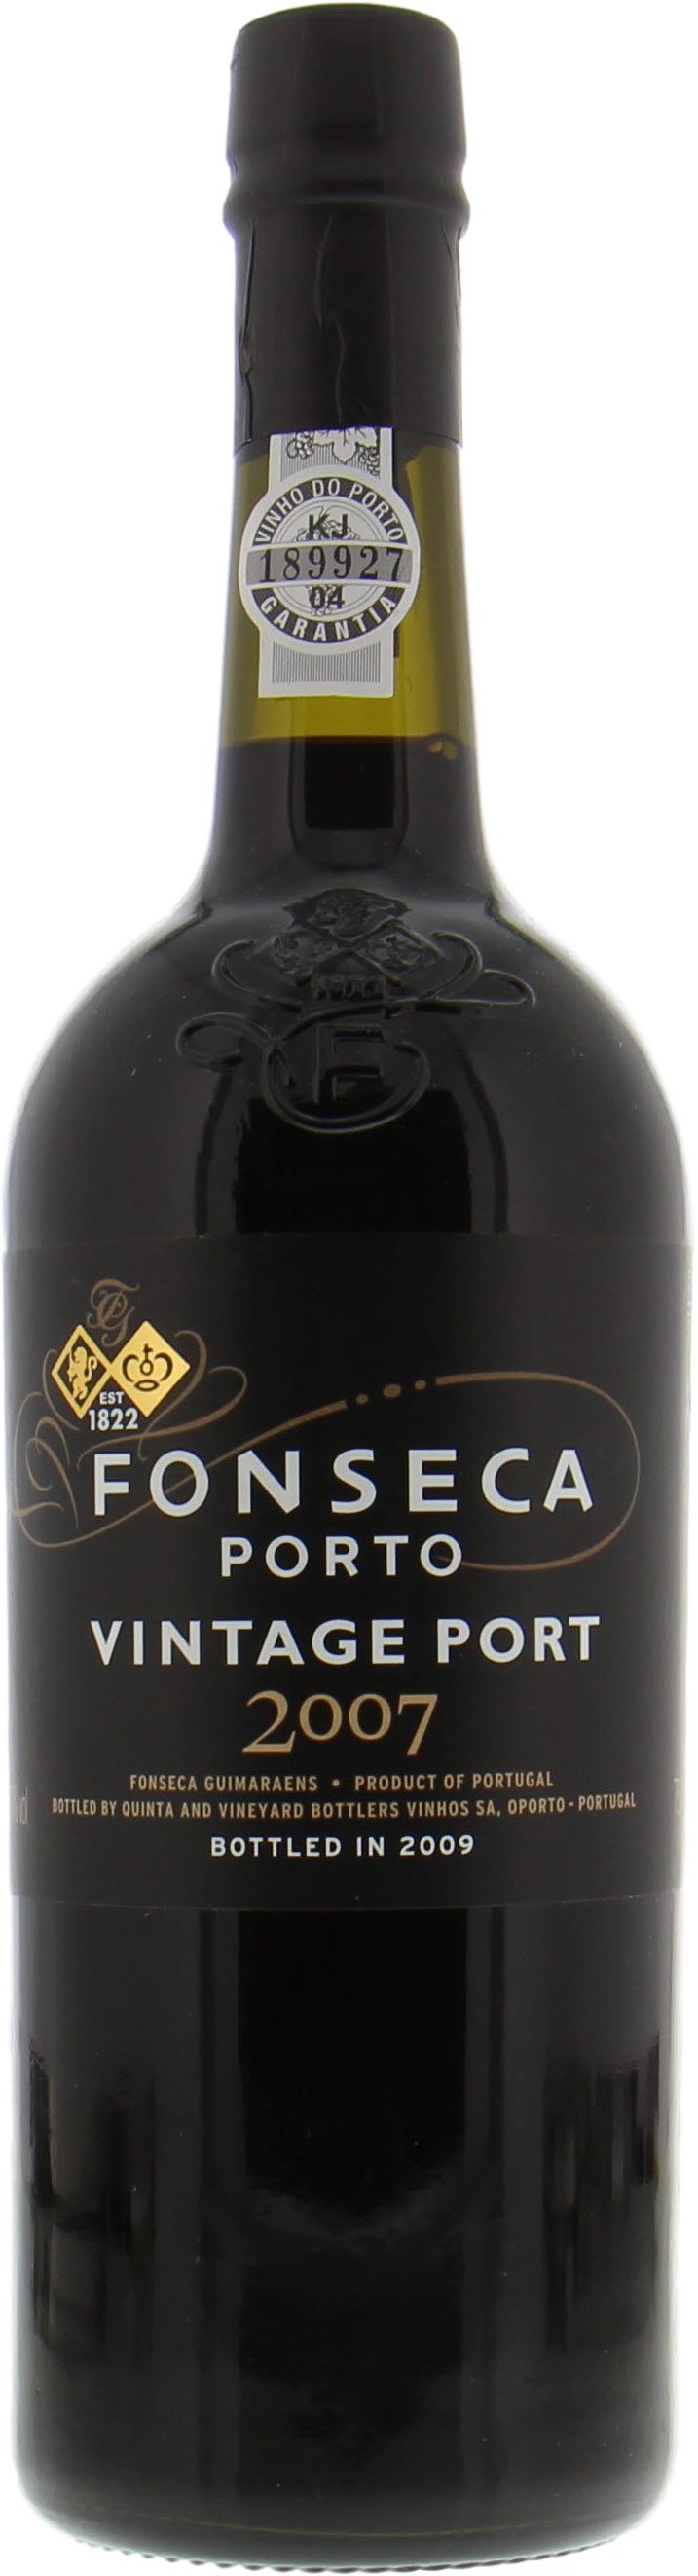 Fonseca - Vintage Port 2007 Perfect